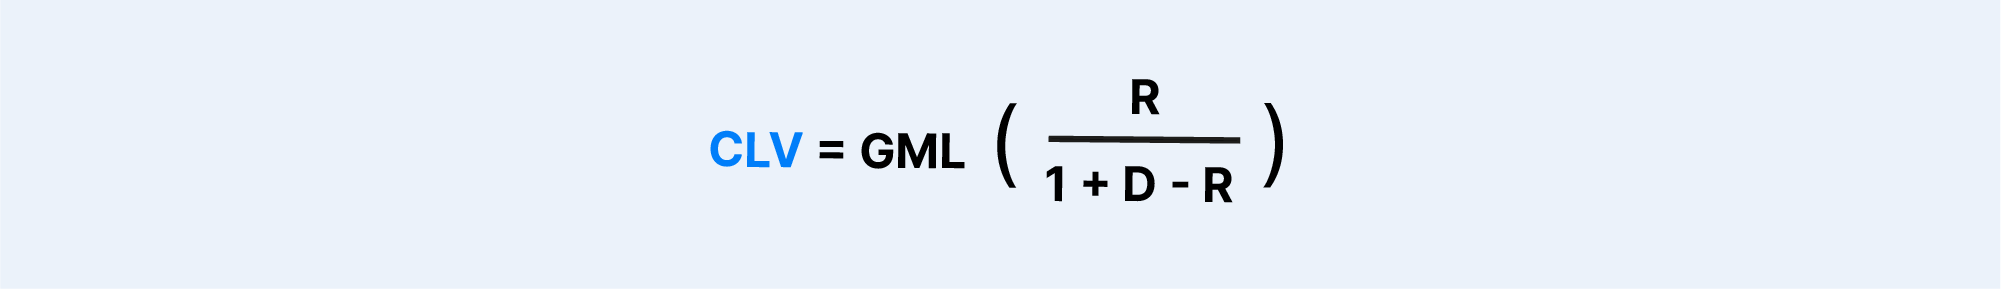 traditional_clv_formula.png